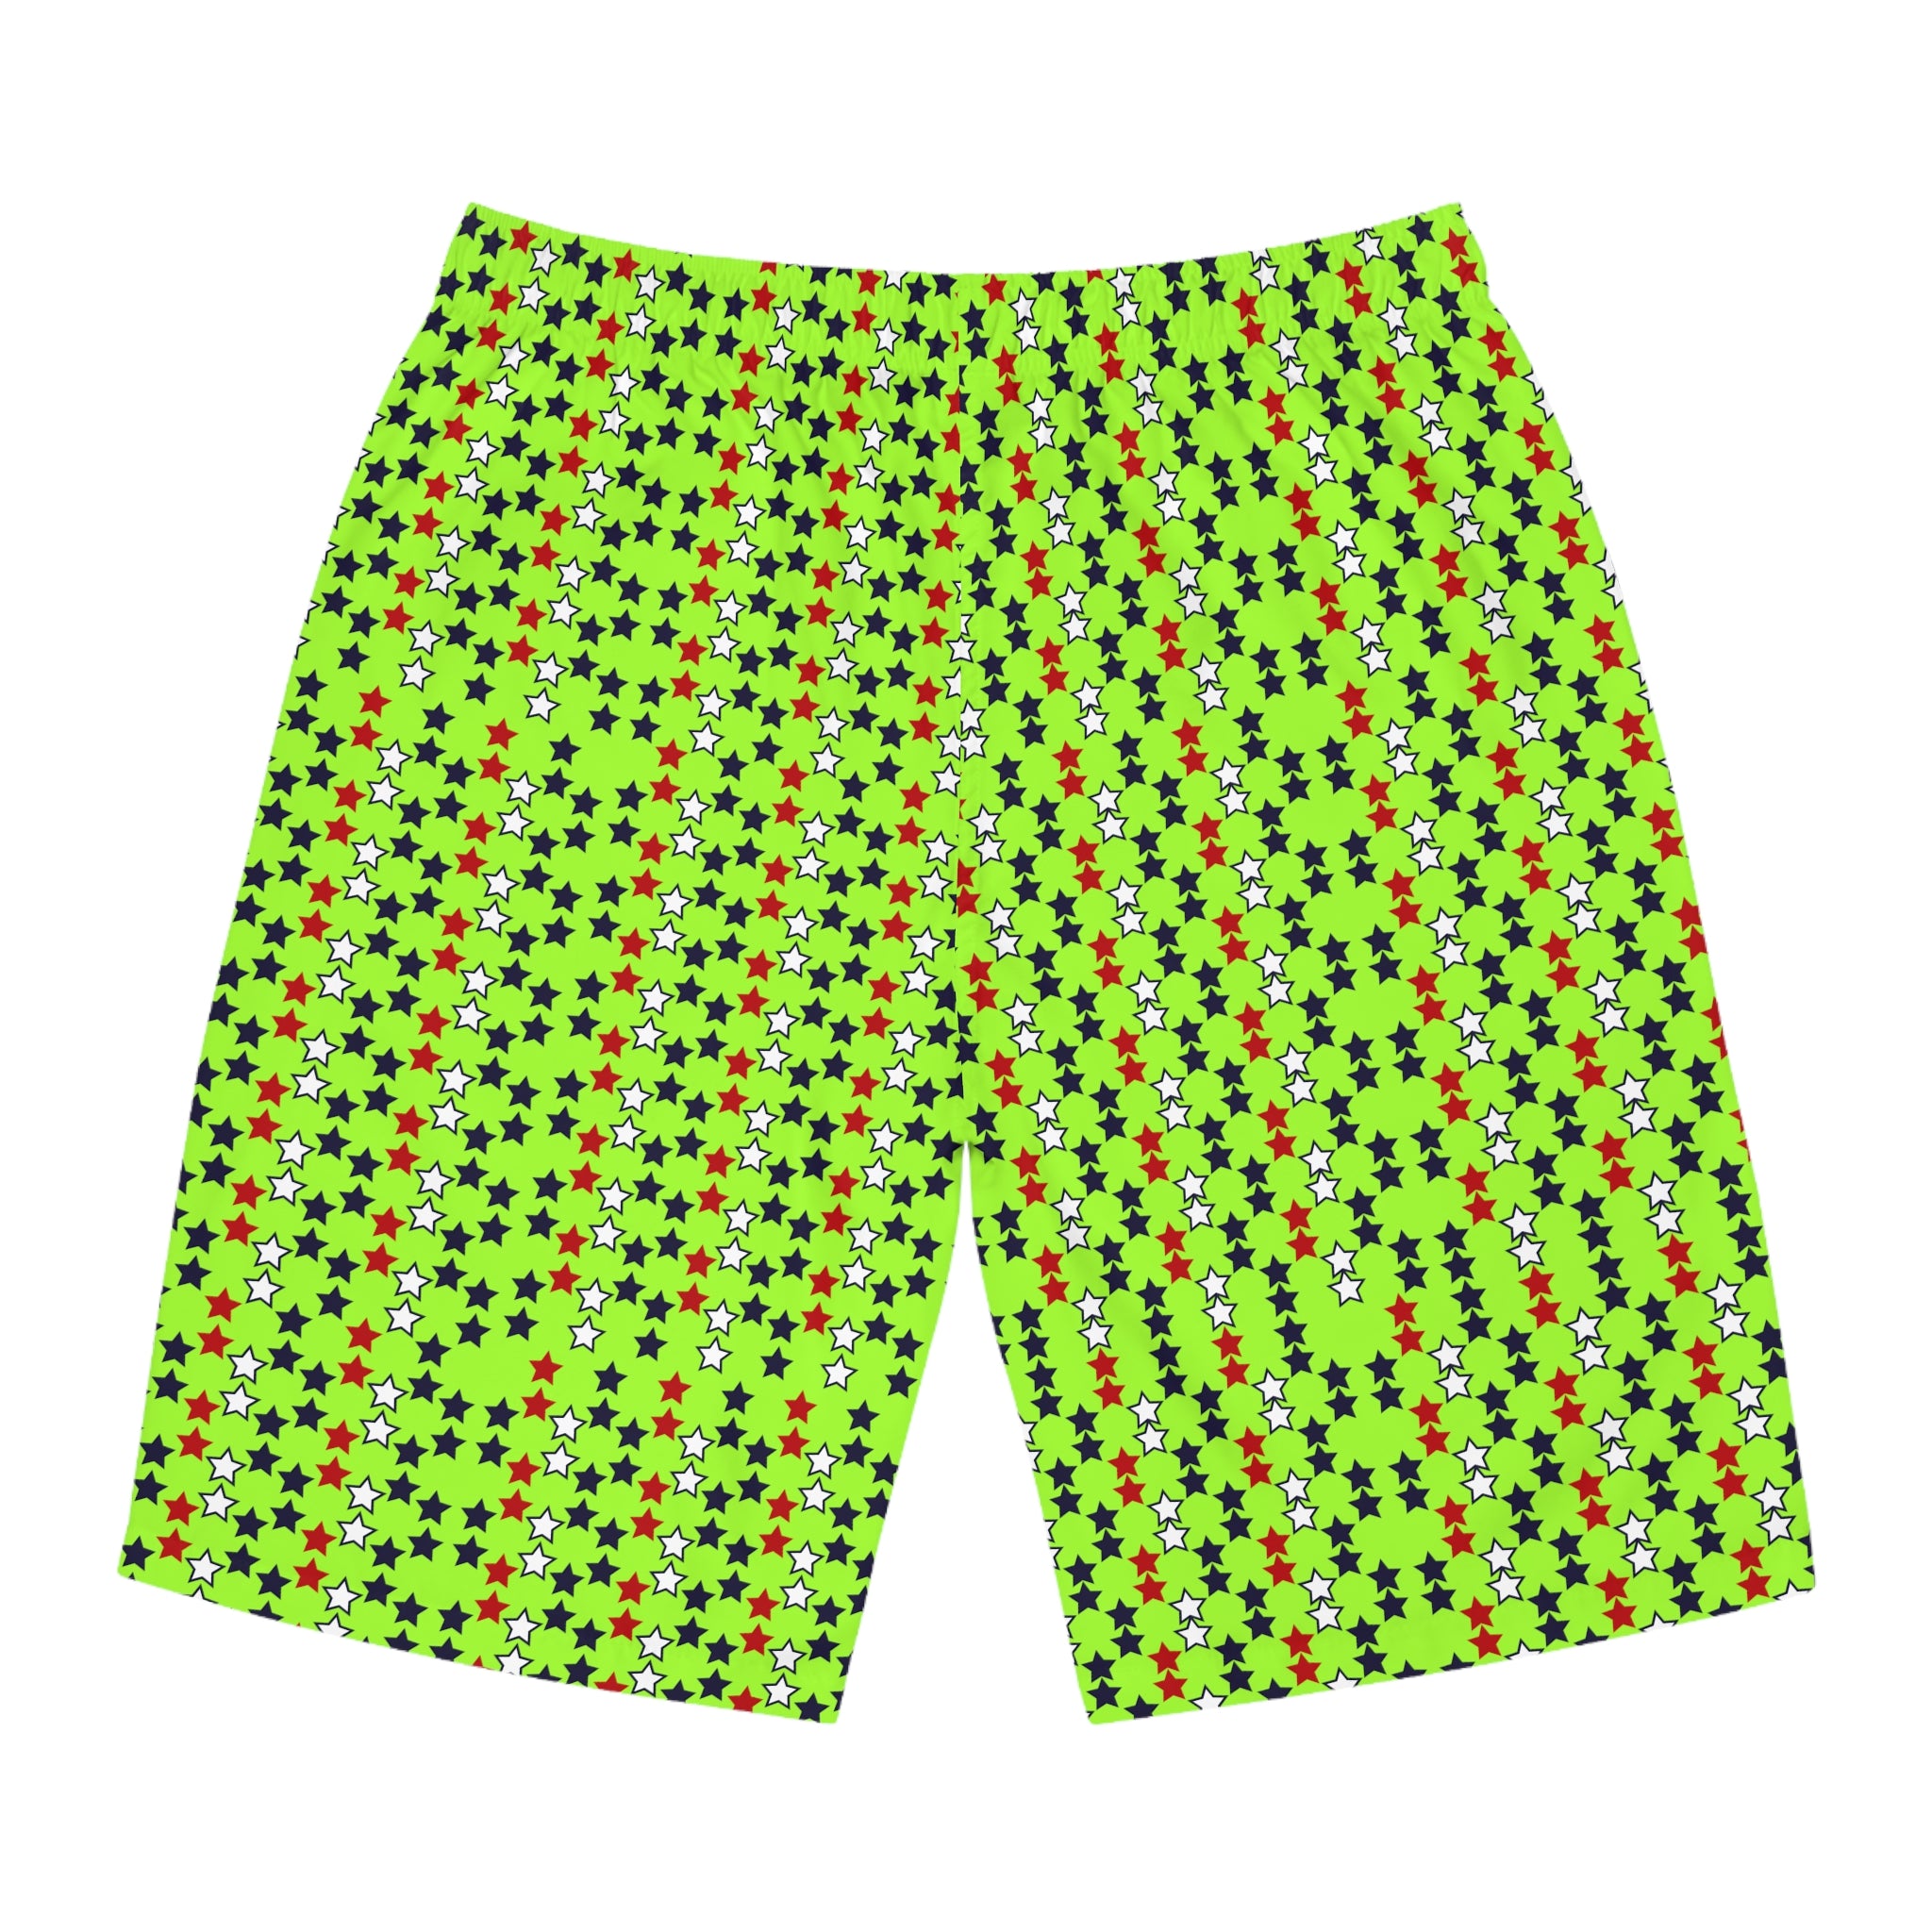 lime green star print board shorts for men